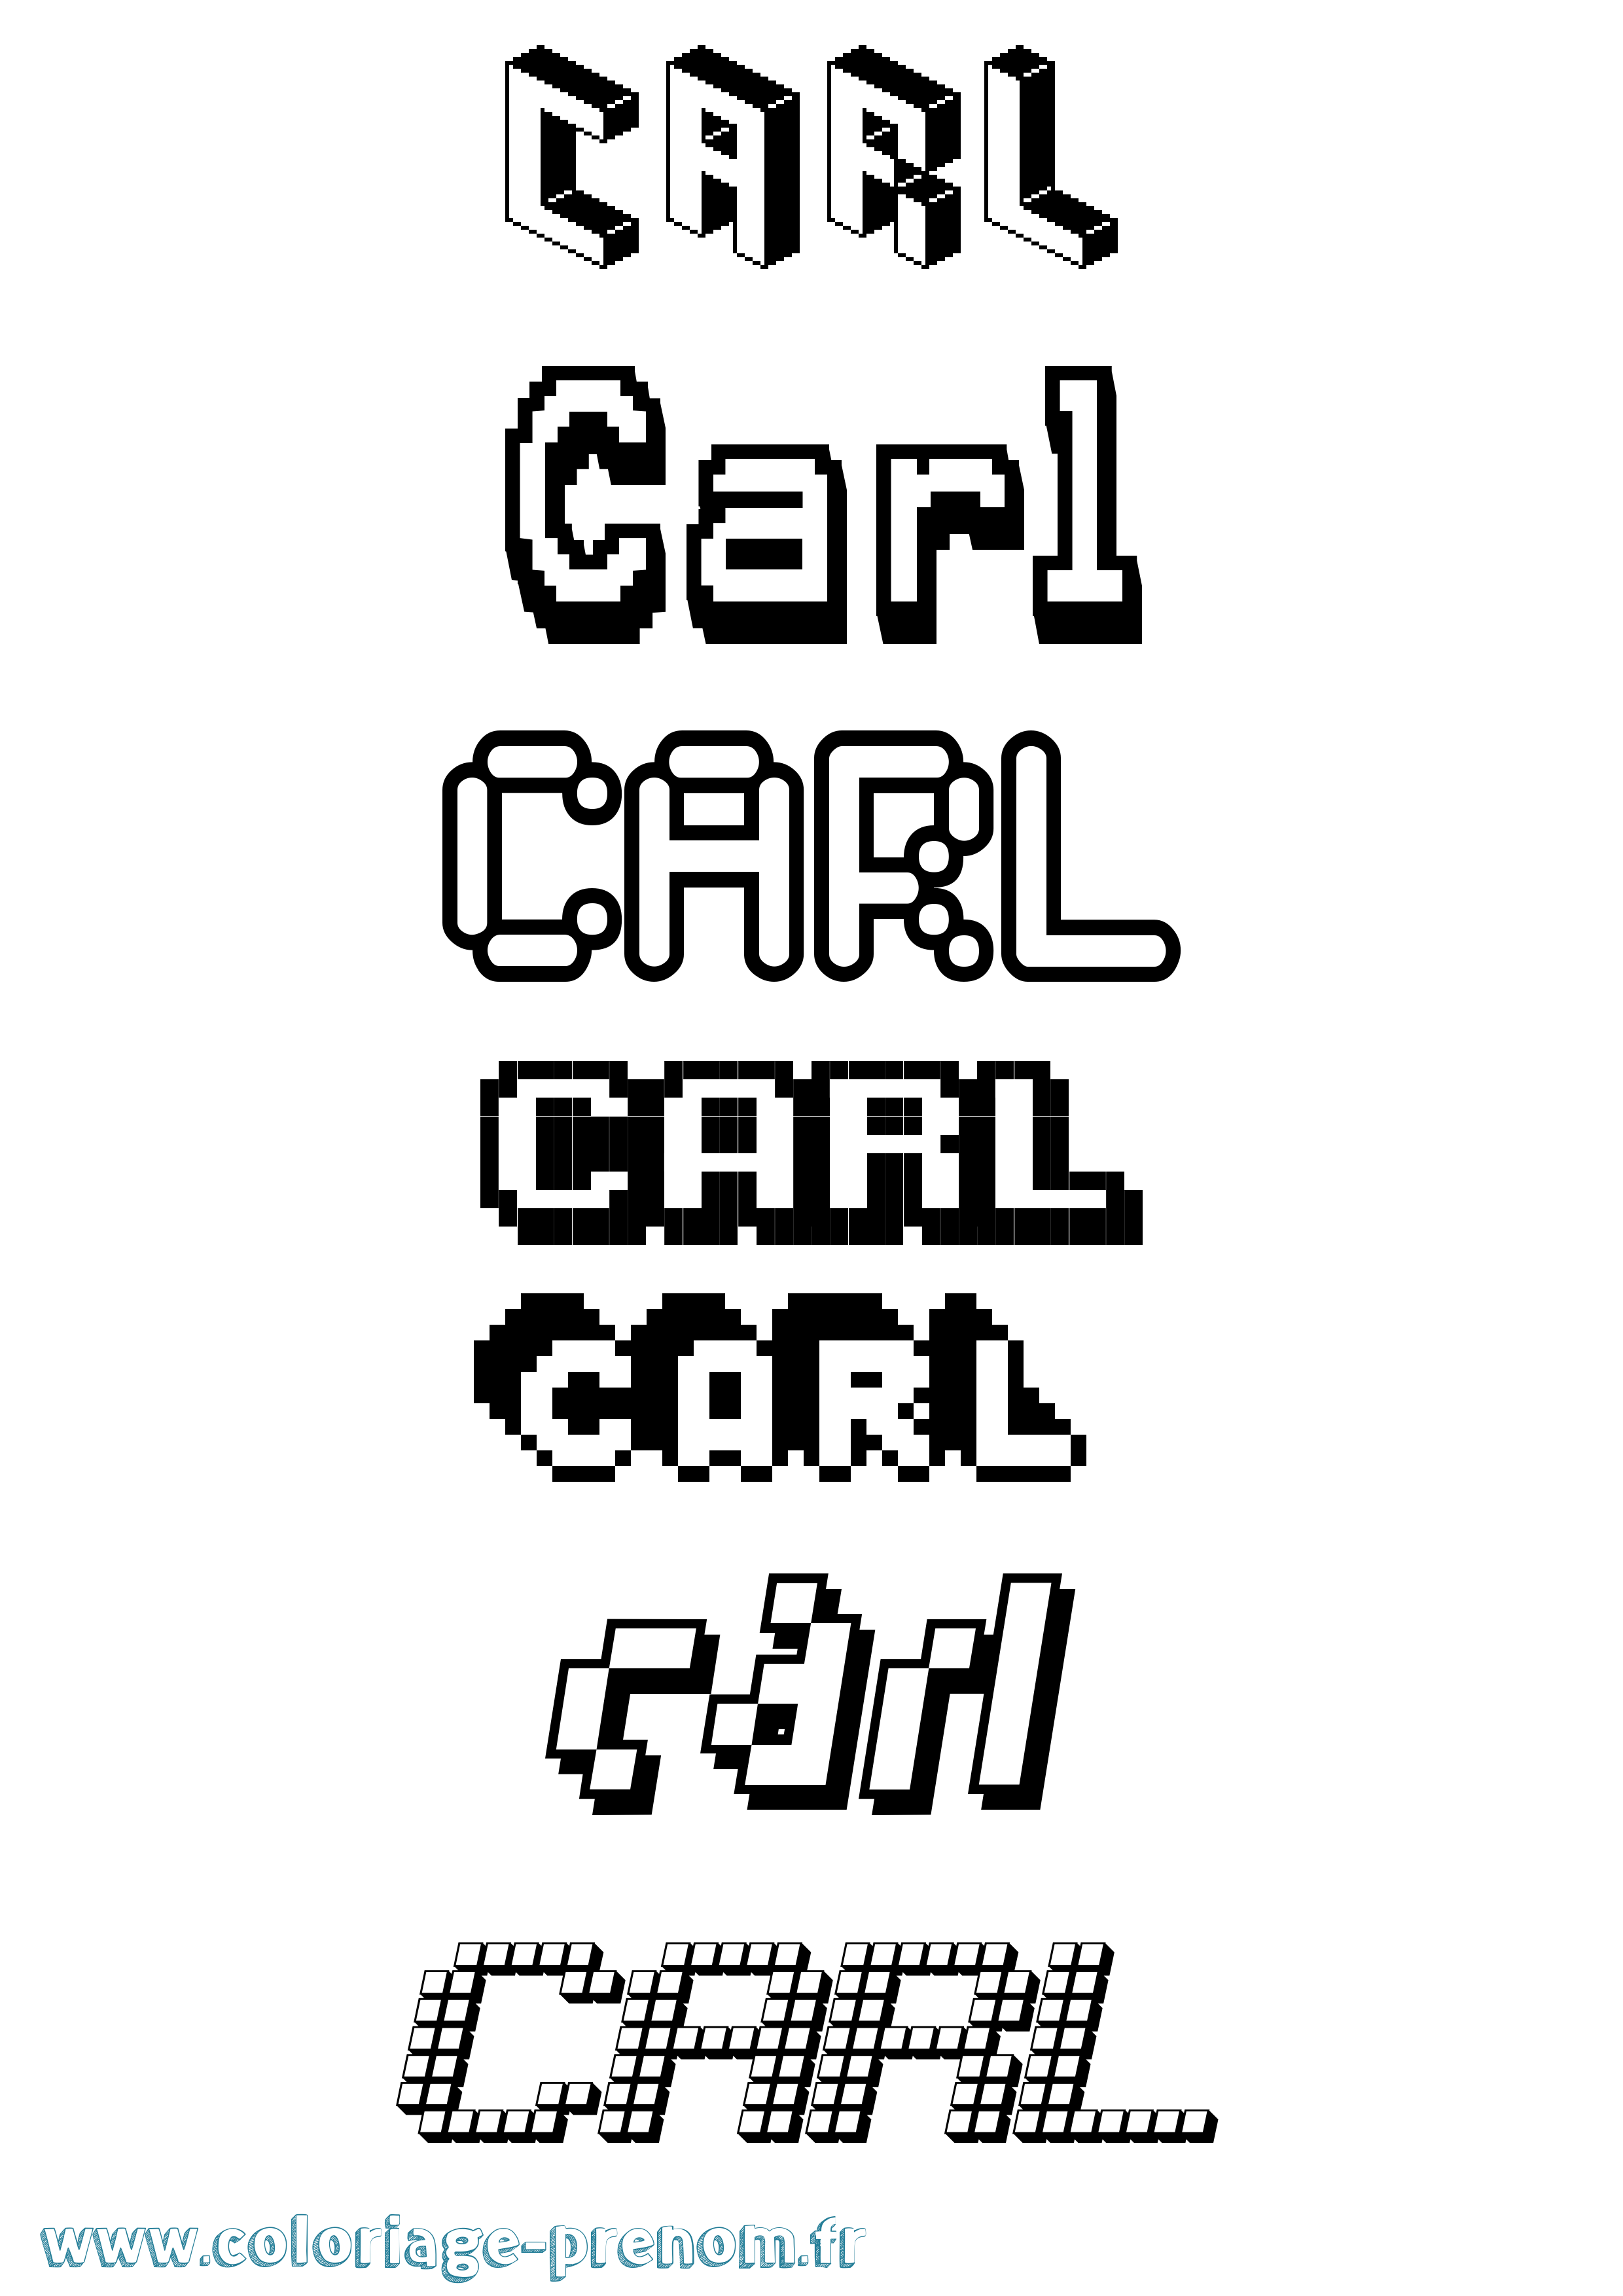 Coloriage prénom Carl